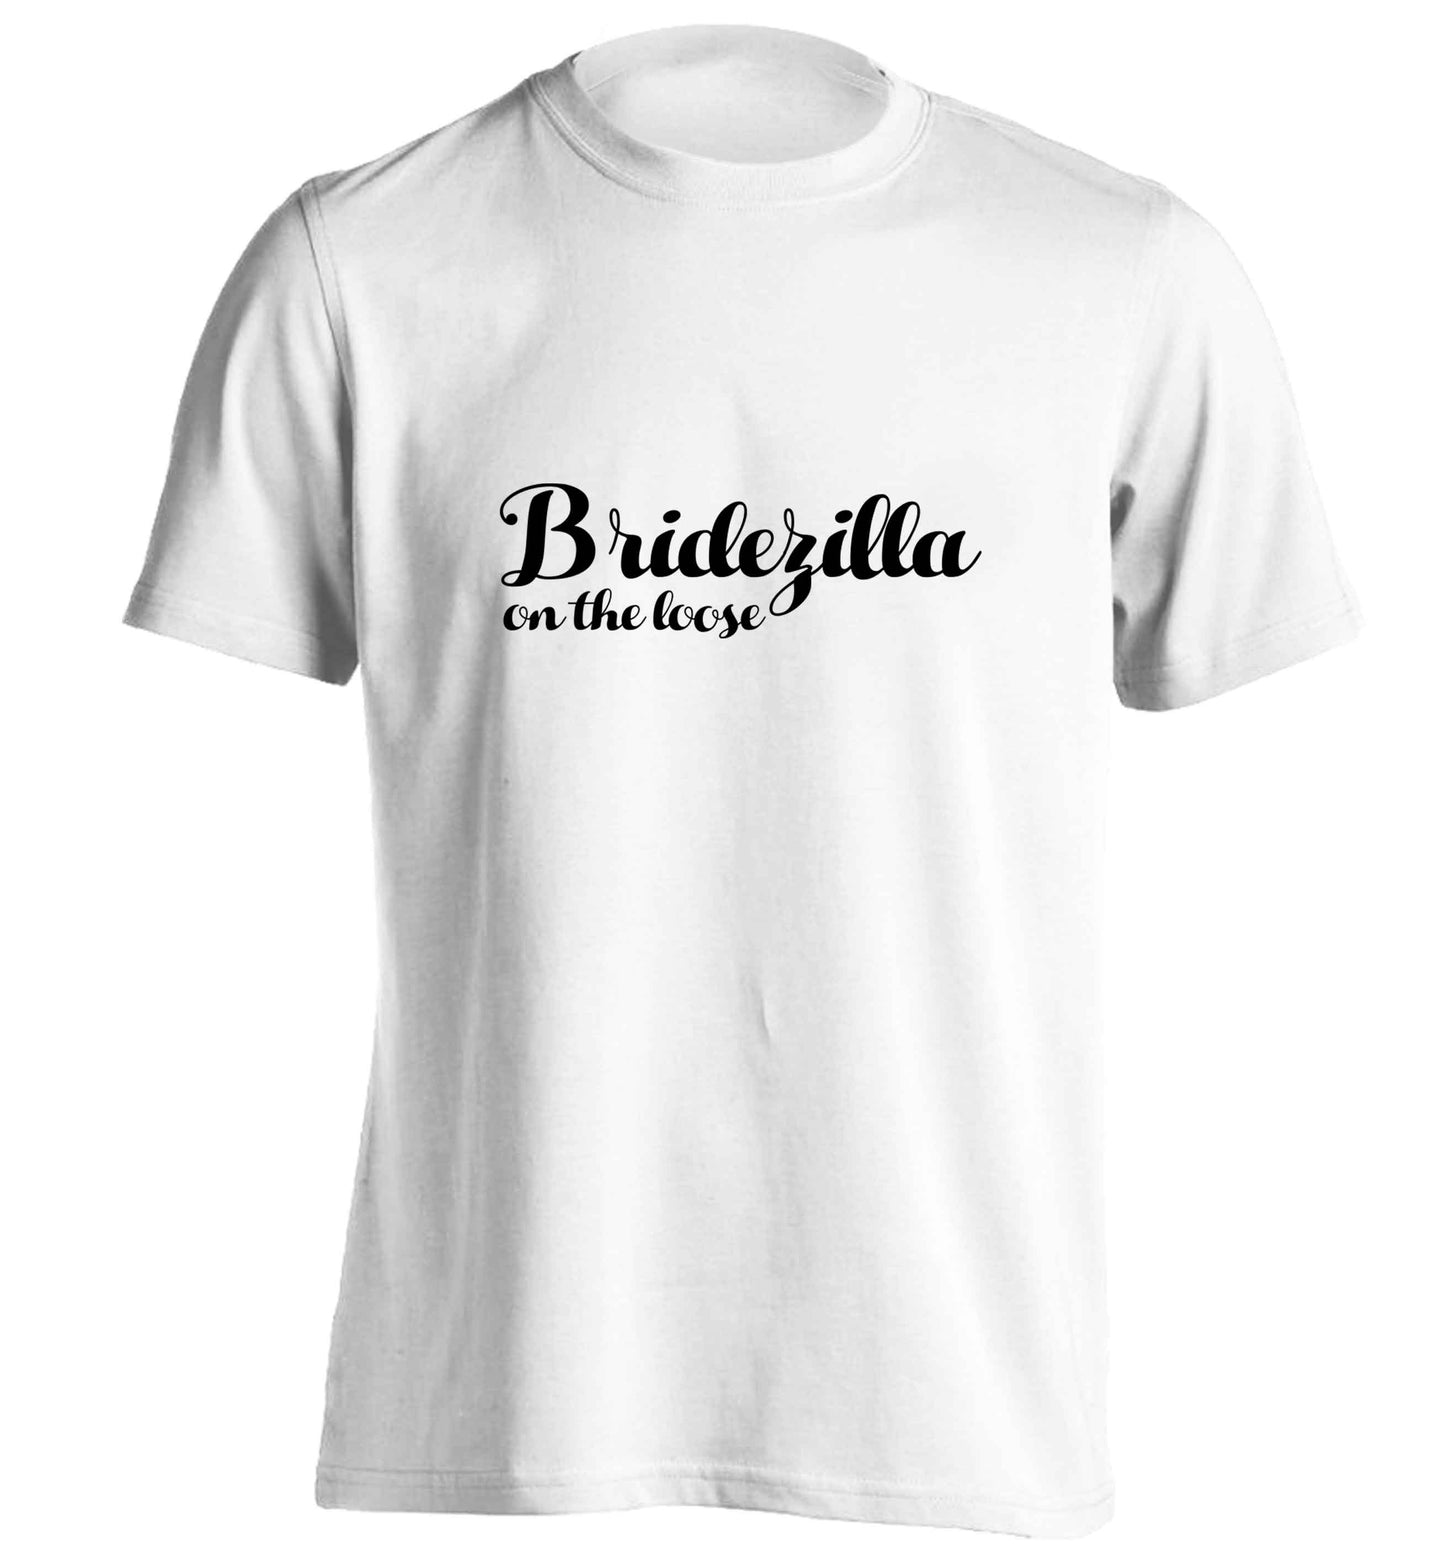 Bridezilla on the loose adults unisex white Tshirt 2XL